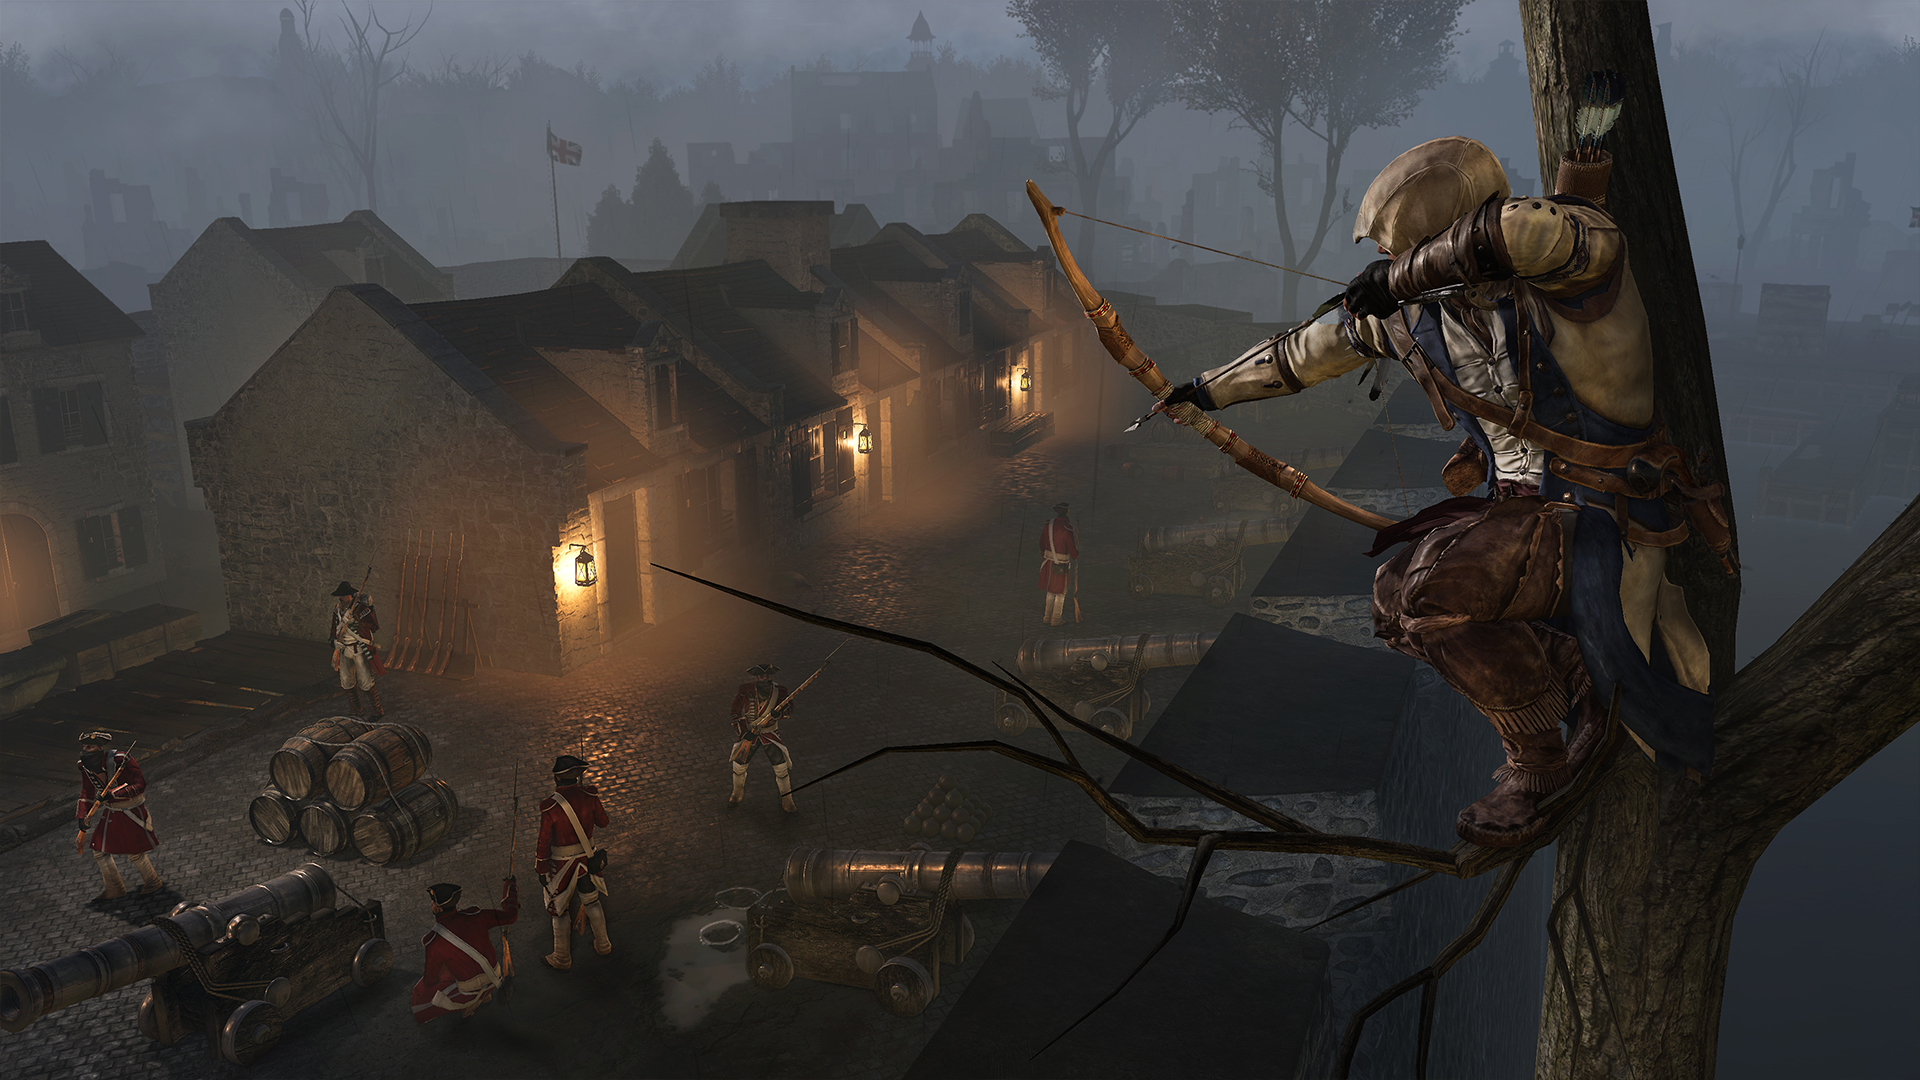 Baixar Assassins Creed 3 Complete Edition para pc via torrent